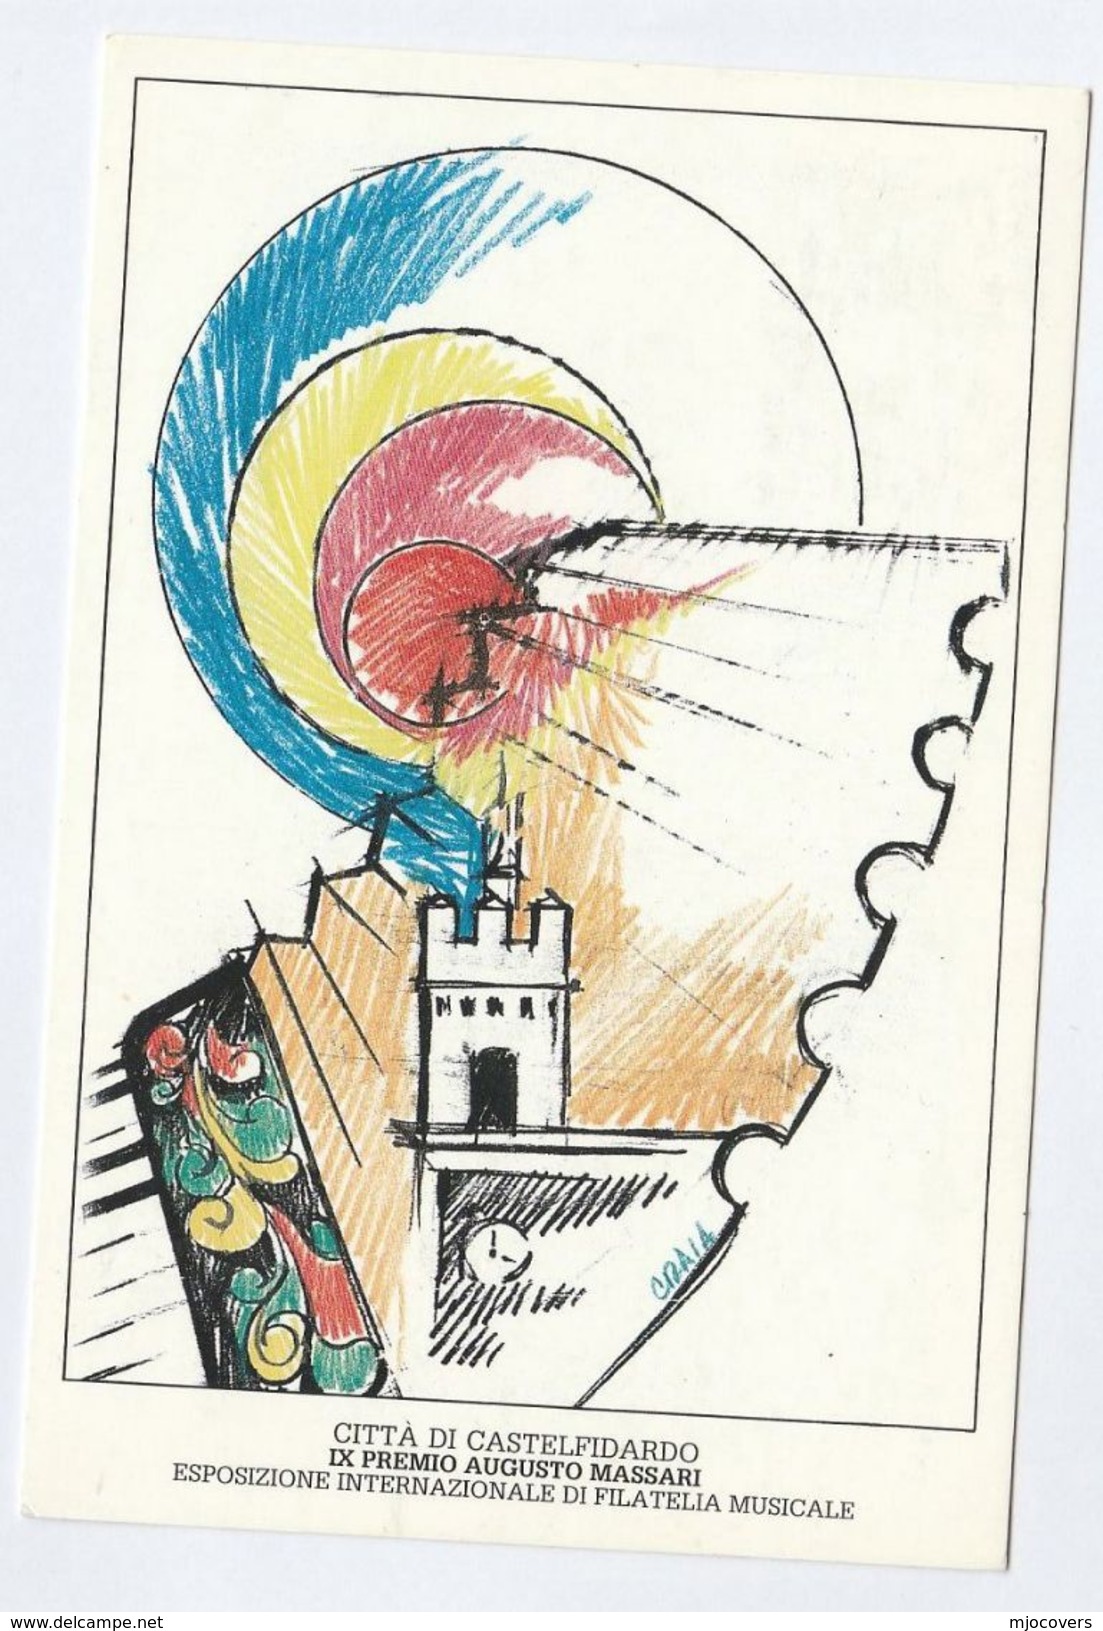 1986 Castelfidardo MUSIC PHILATELY EXHIBITION EVENT COVER Card ITALY Stamps Postcard - Musica